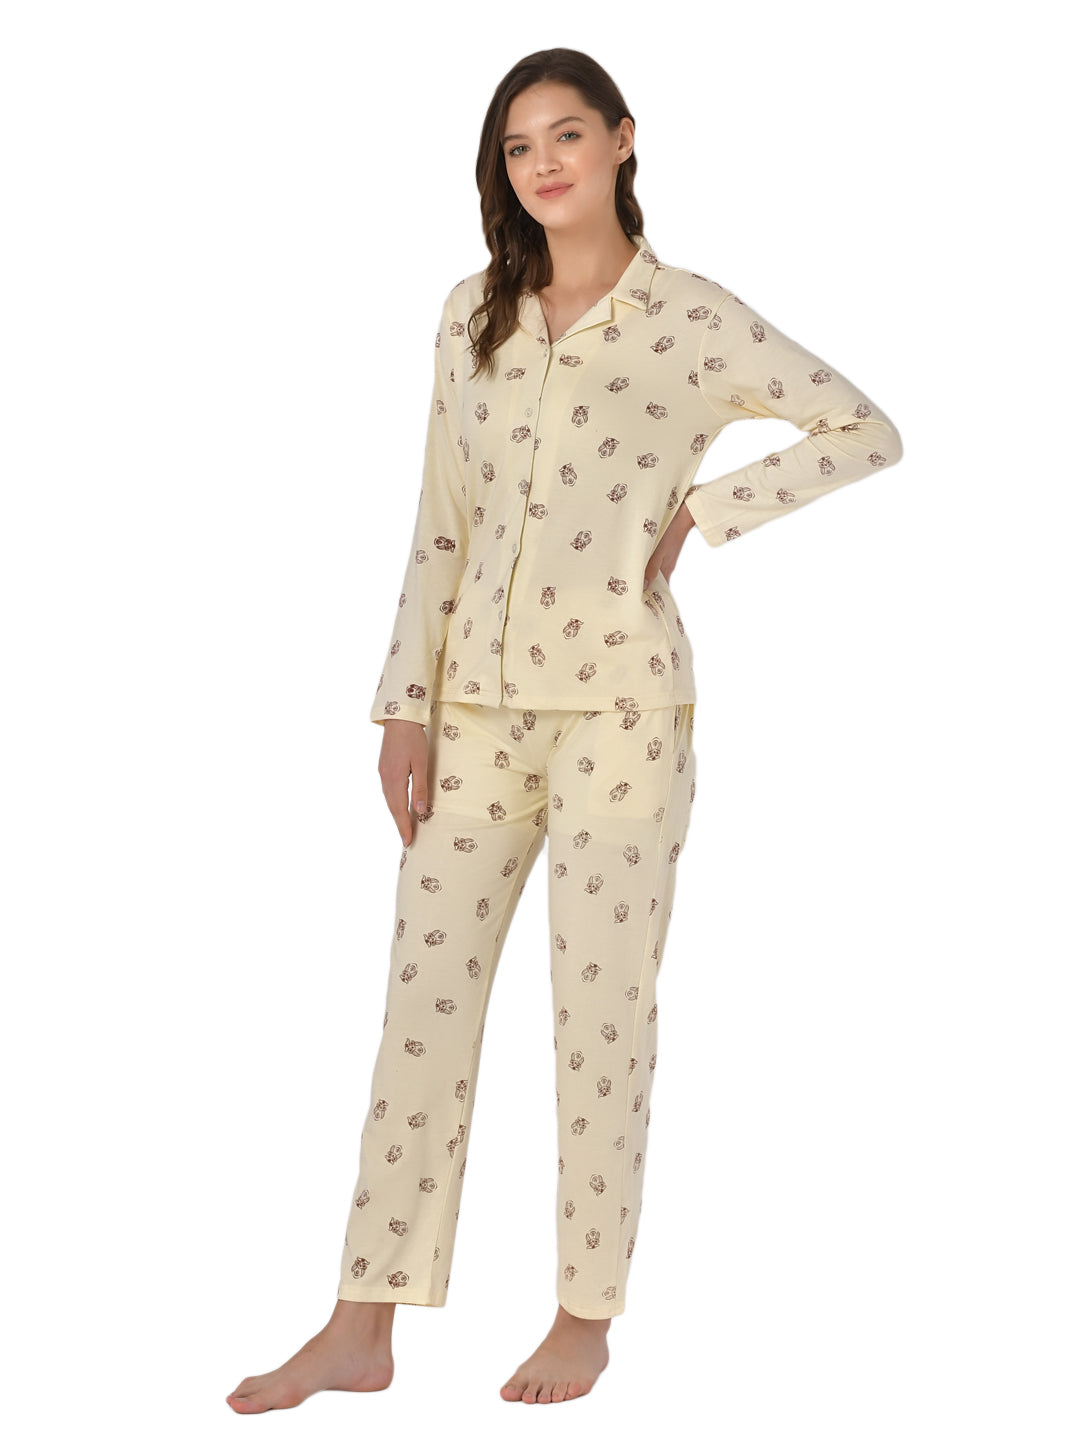 Klamotten Women's Yellow Allover Printed Top Pyjama Set N53Yb